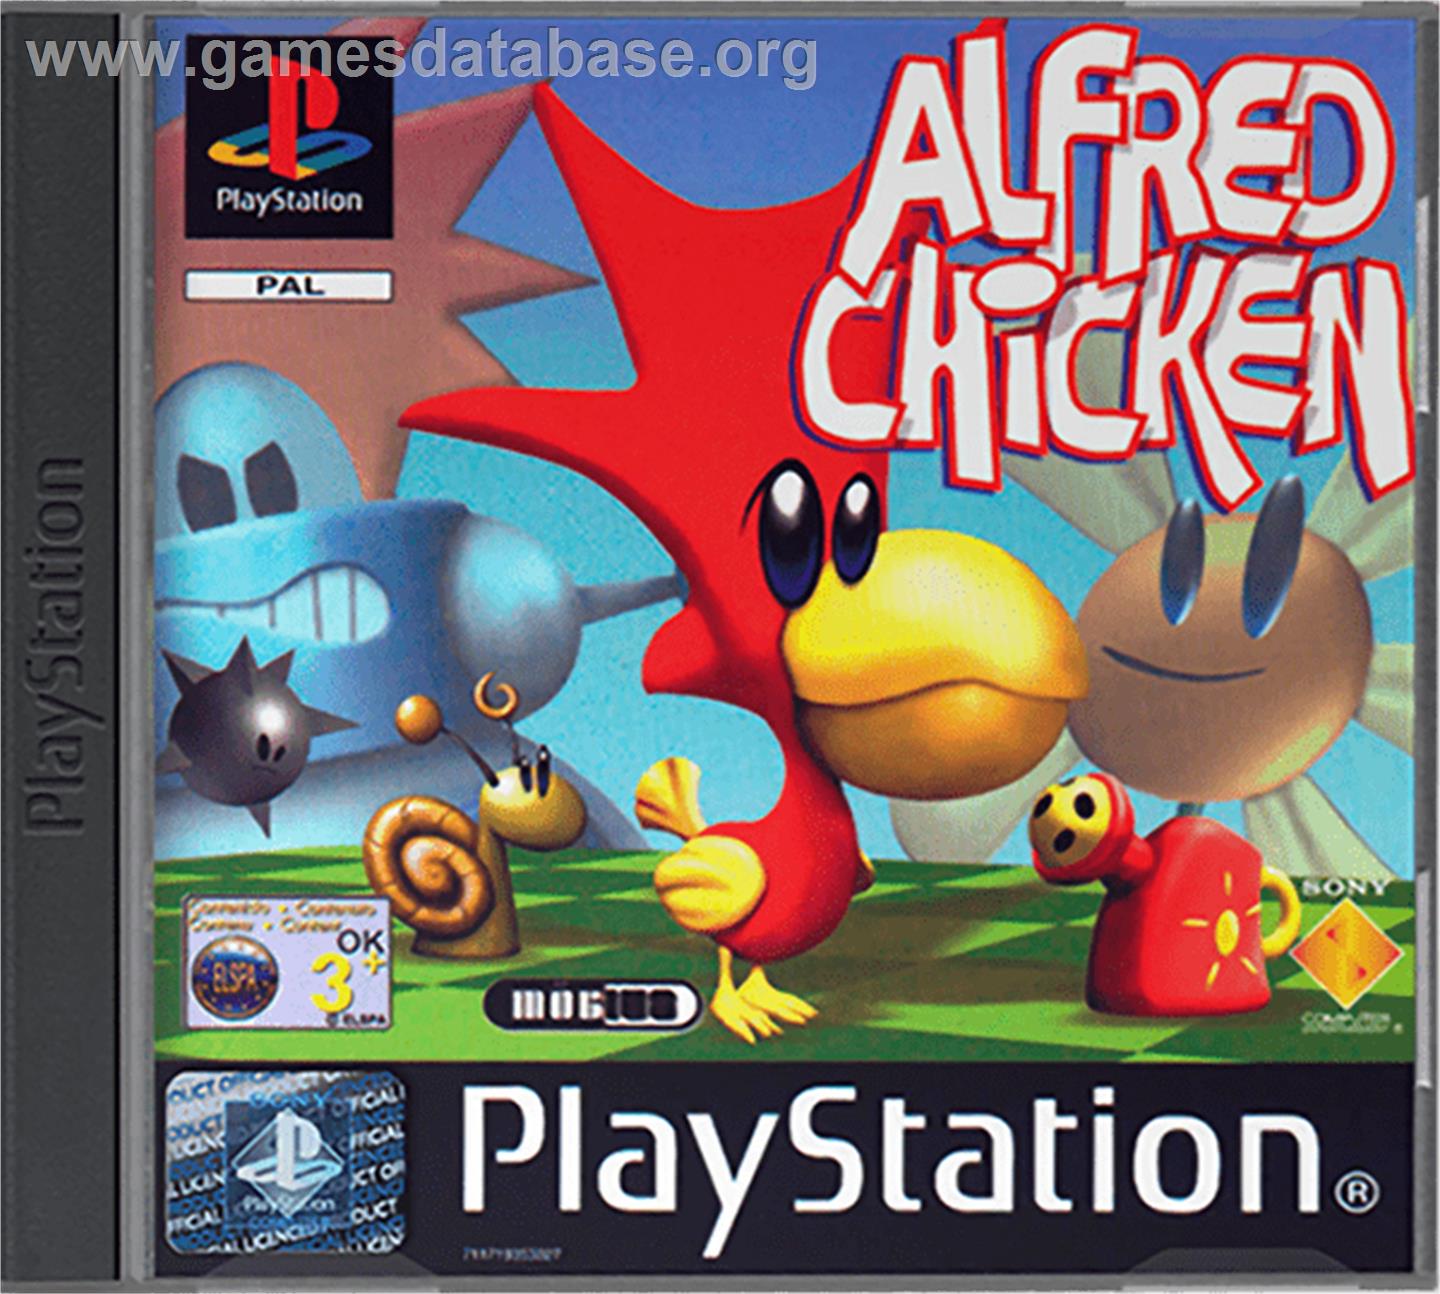 Alfred Chicken - Sony Playstation - Artwork - Box